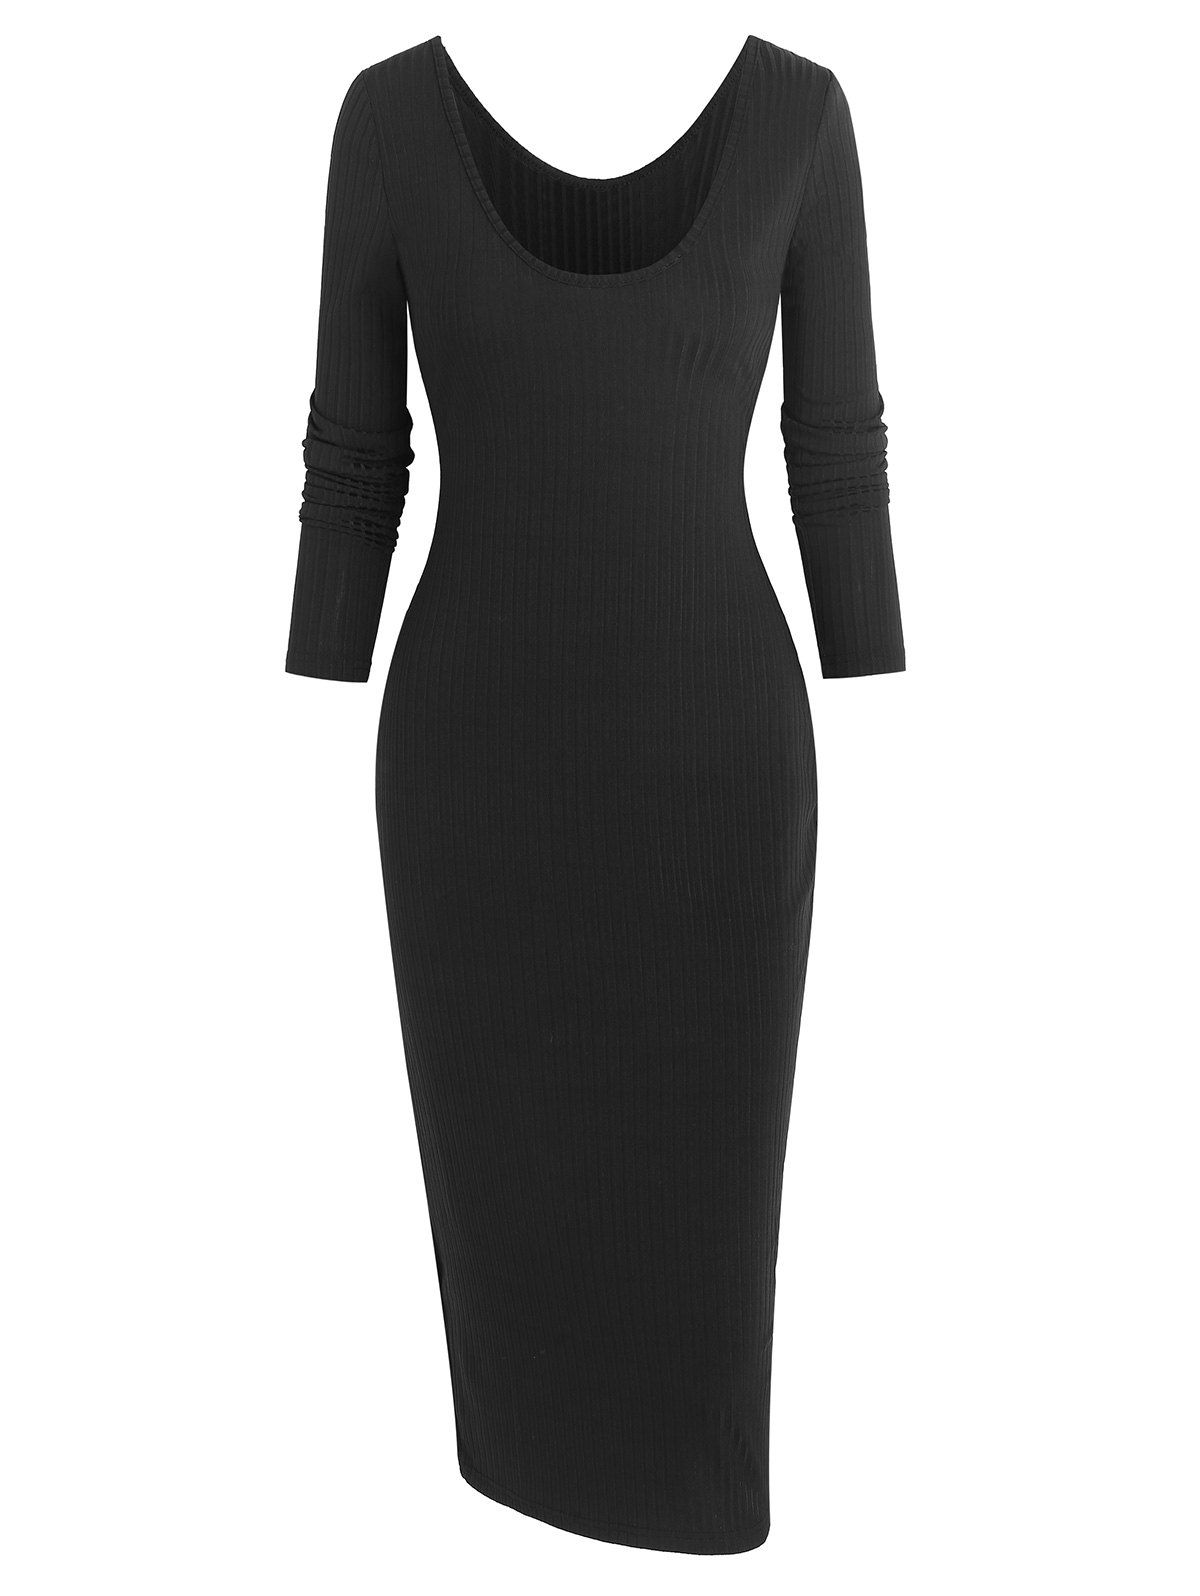 Long Sleeve Ribbed Bodycon Sweater Dress - BLACK L